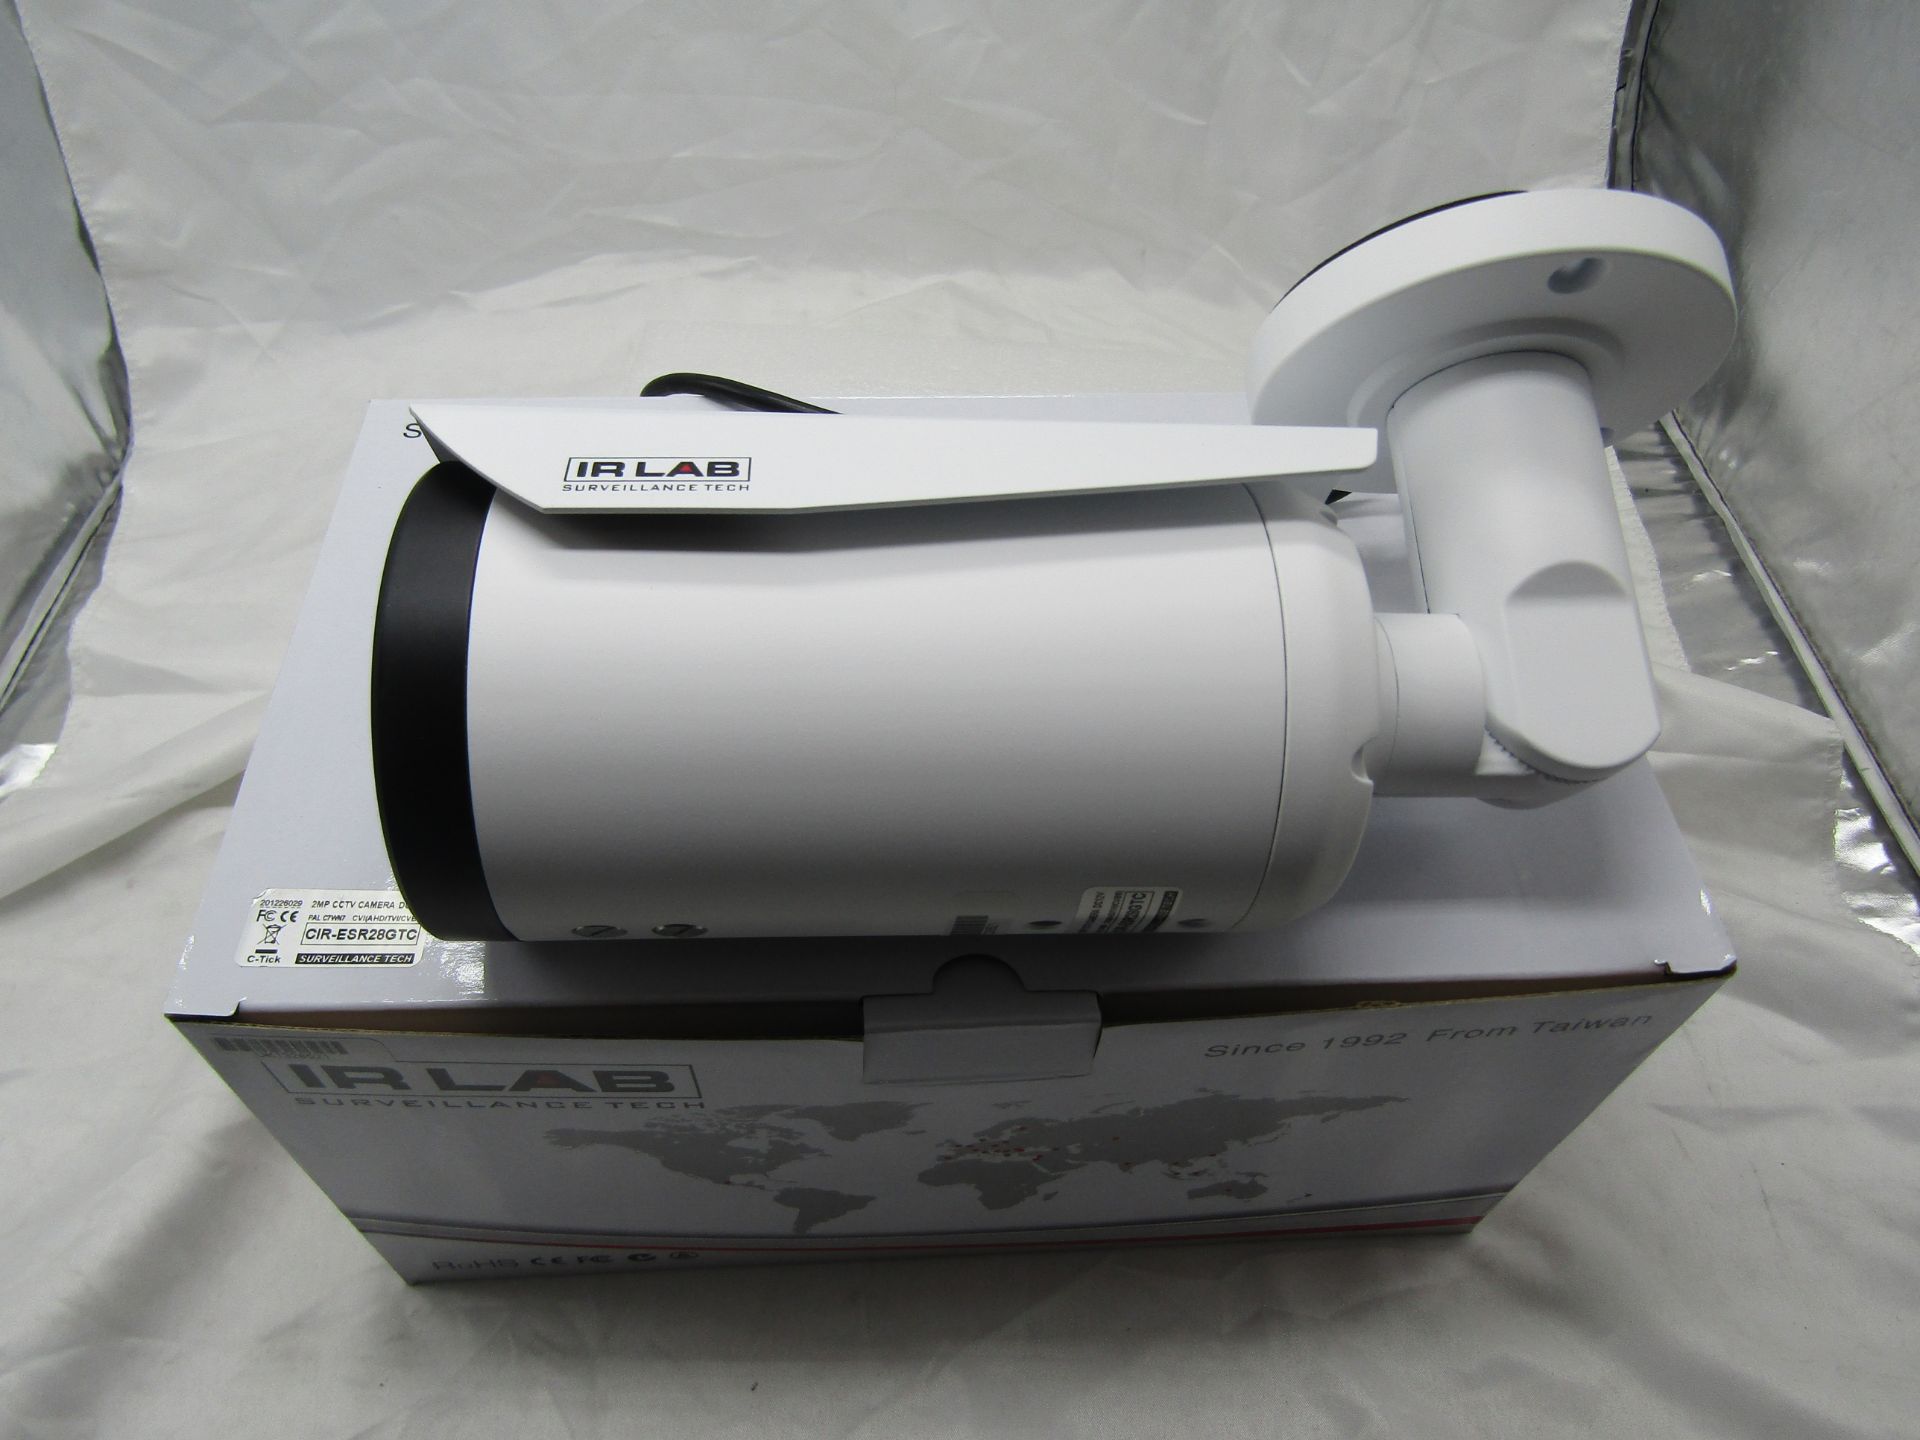 IR LAB 2mp CCTV Camera DC12V. Model: CIR-ESR28GTC - Untested